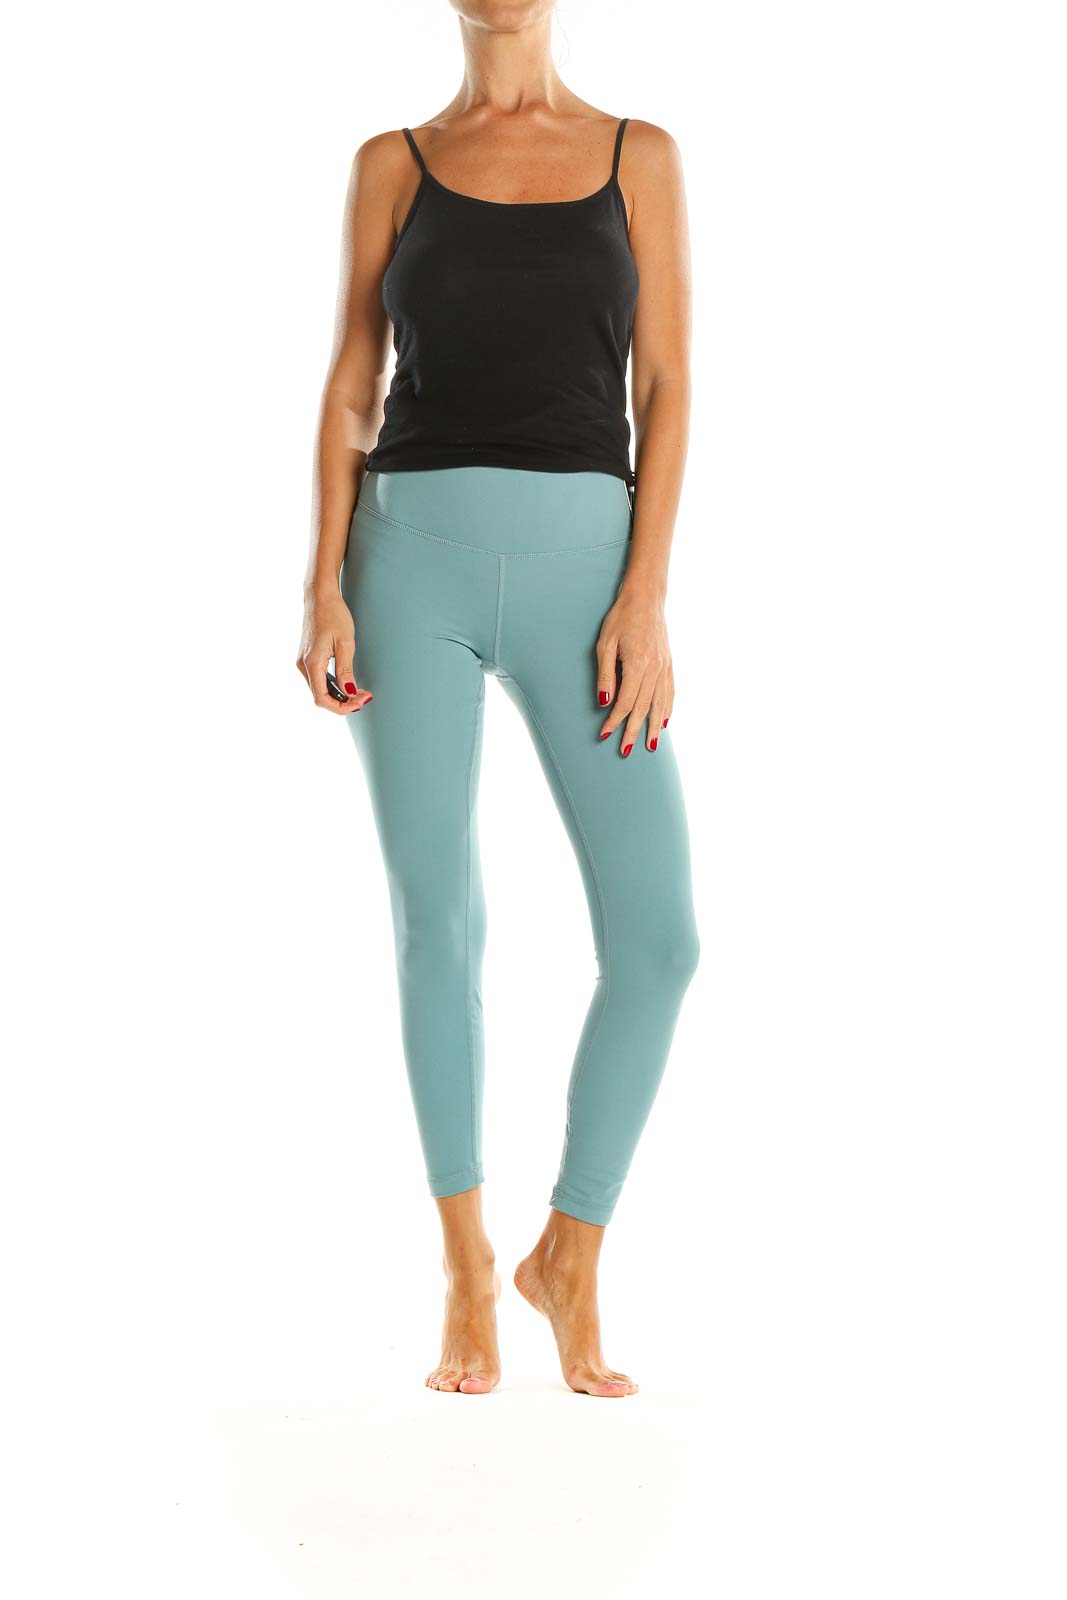 Yogalicious - Blue Activewear Leggings Polyester Spandex